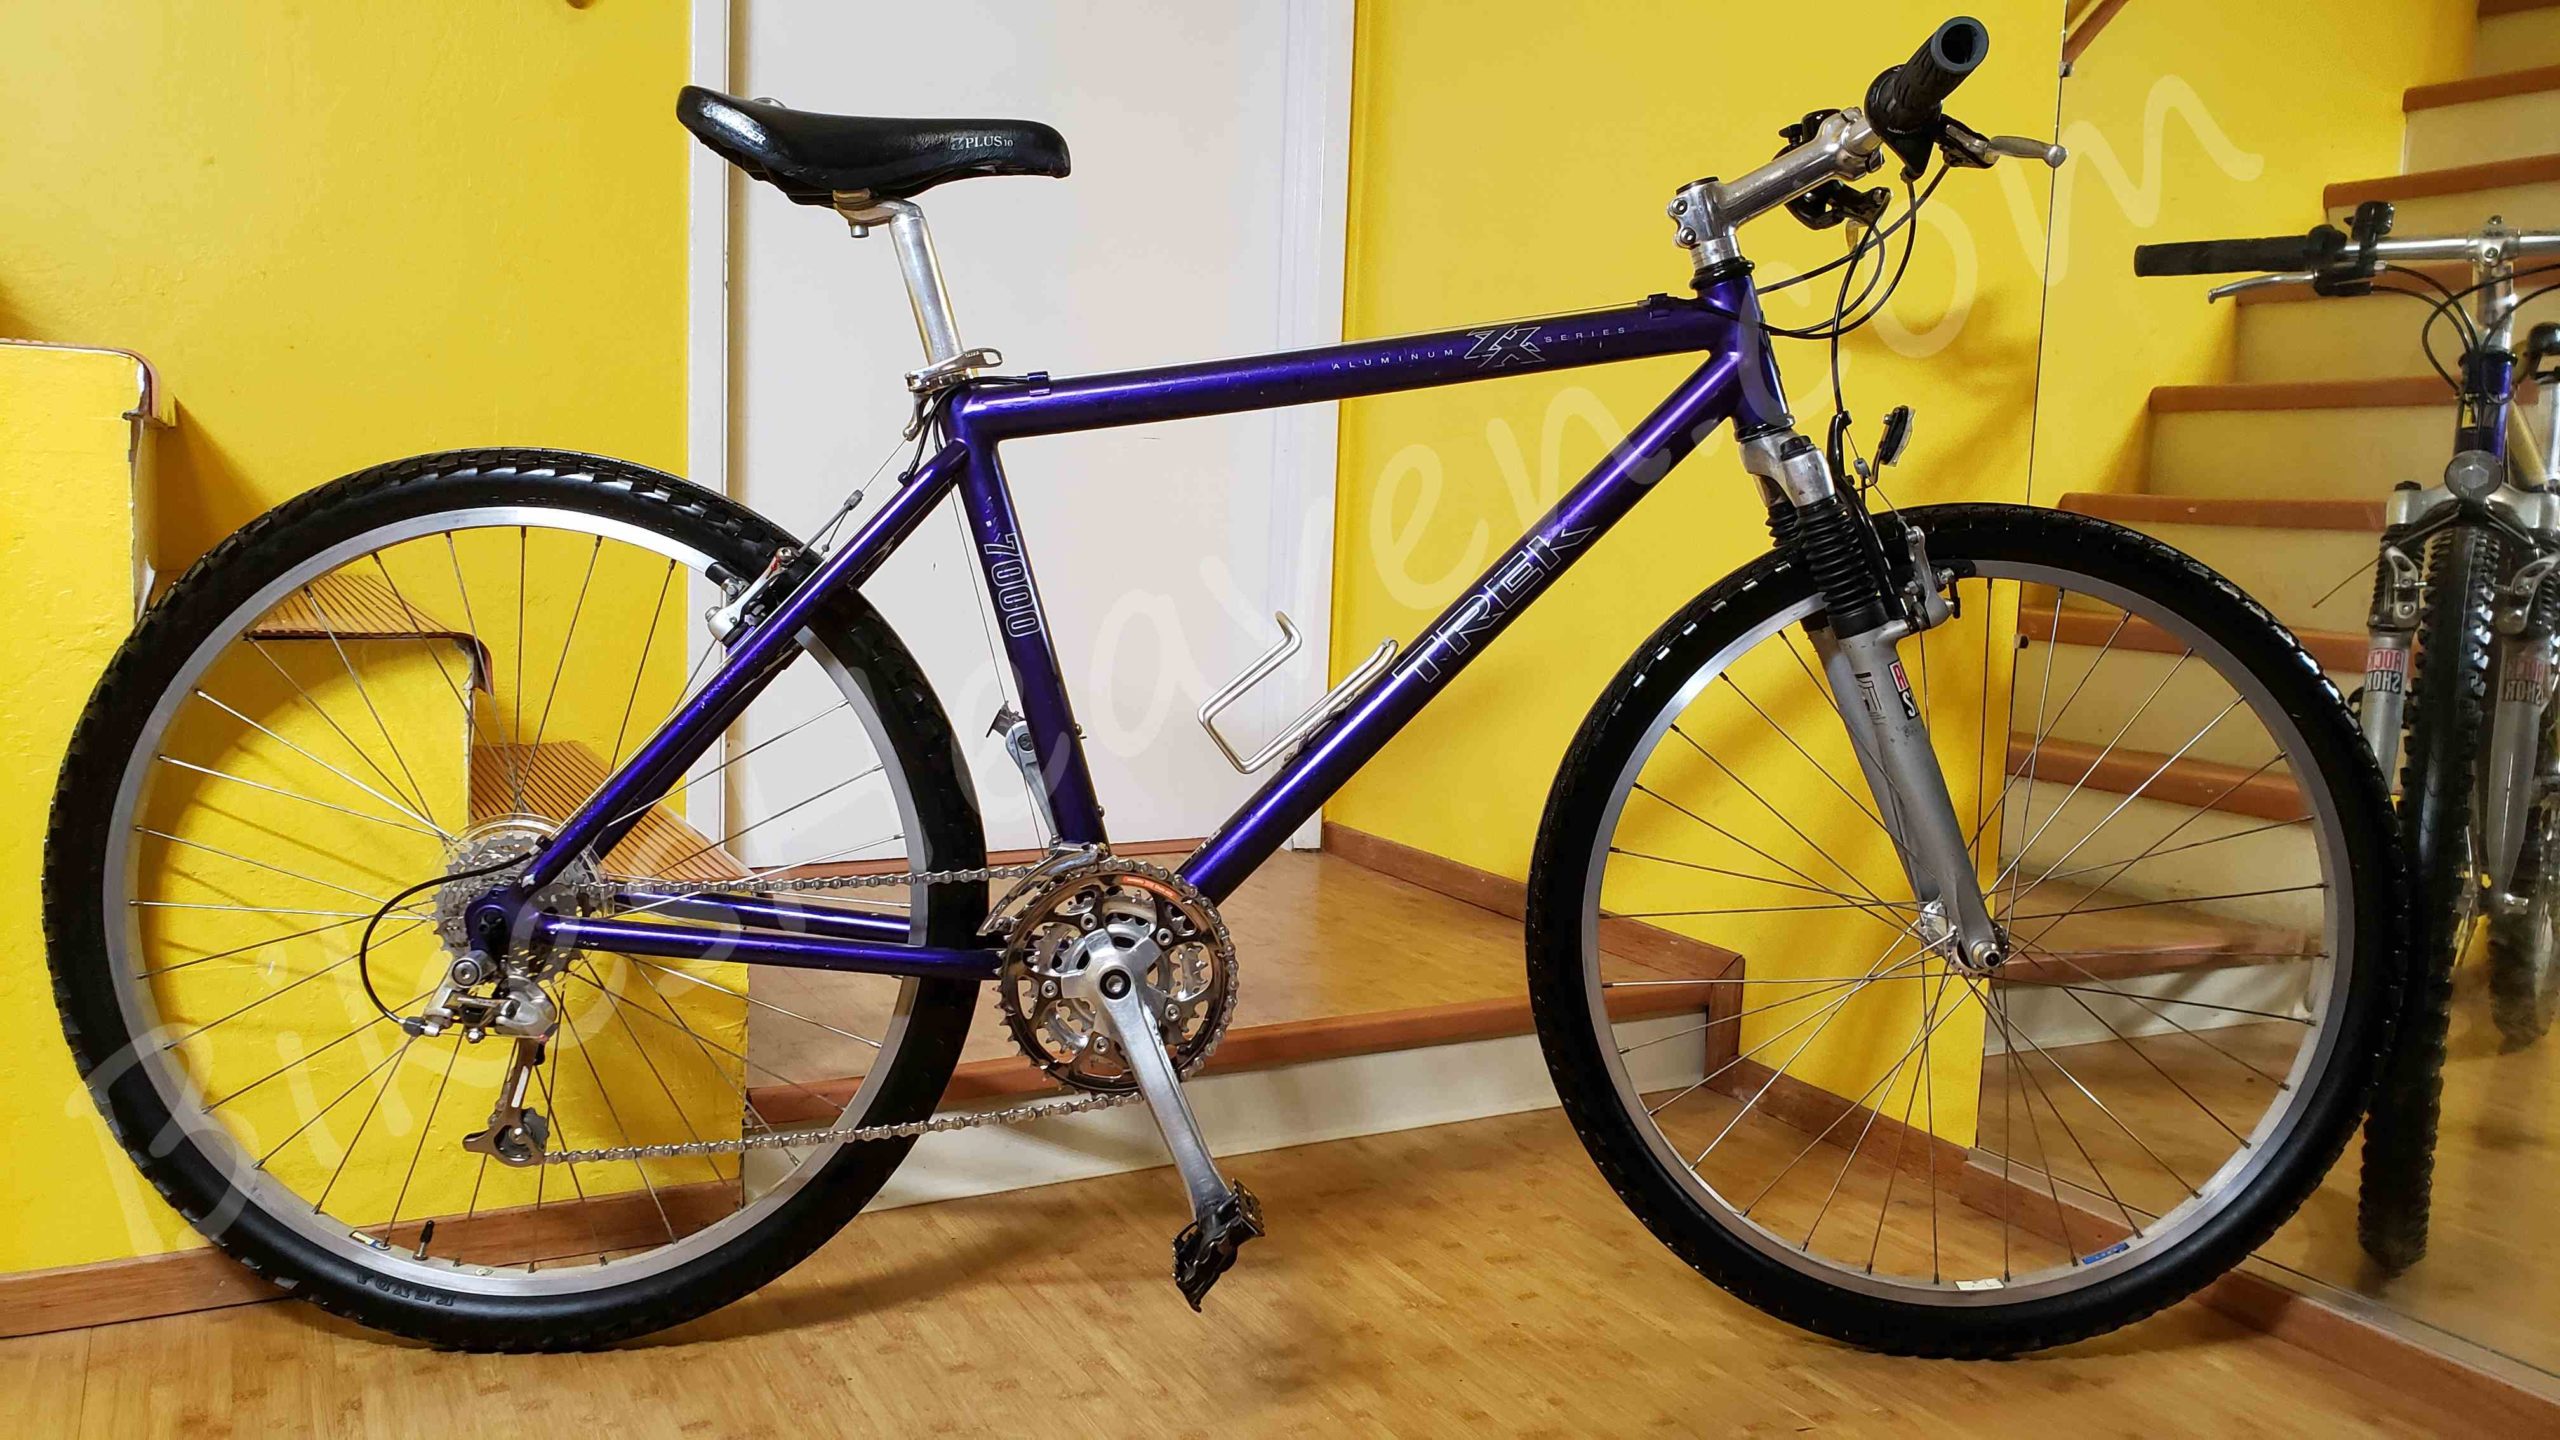 bicicleta trek zx 7000 precio